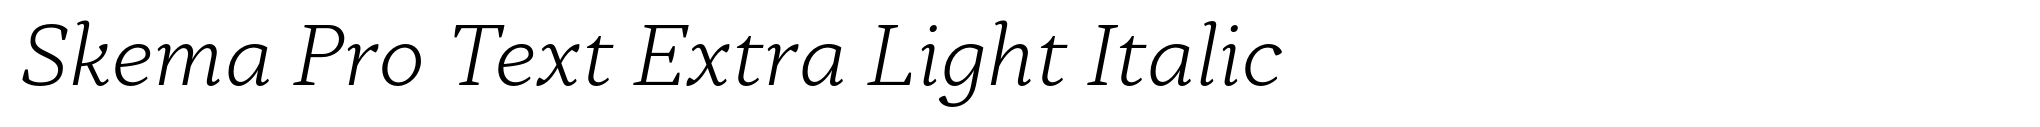 Skema Pro Text Extra Light Italic image